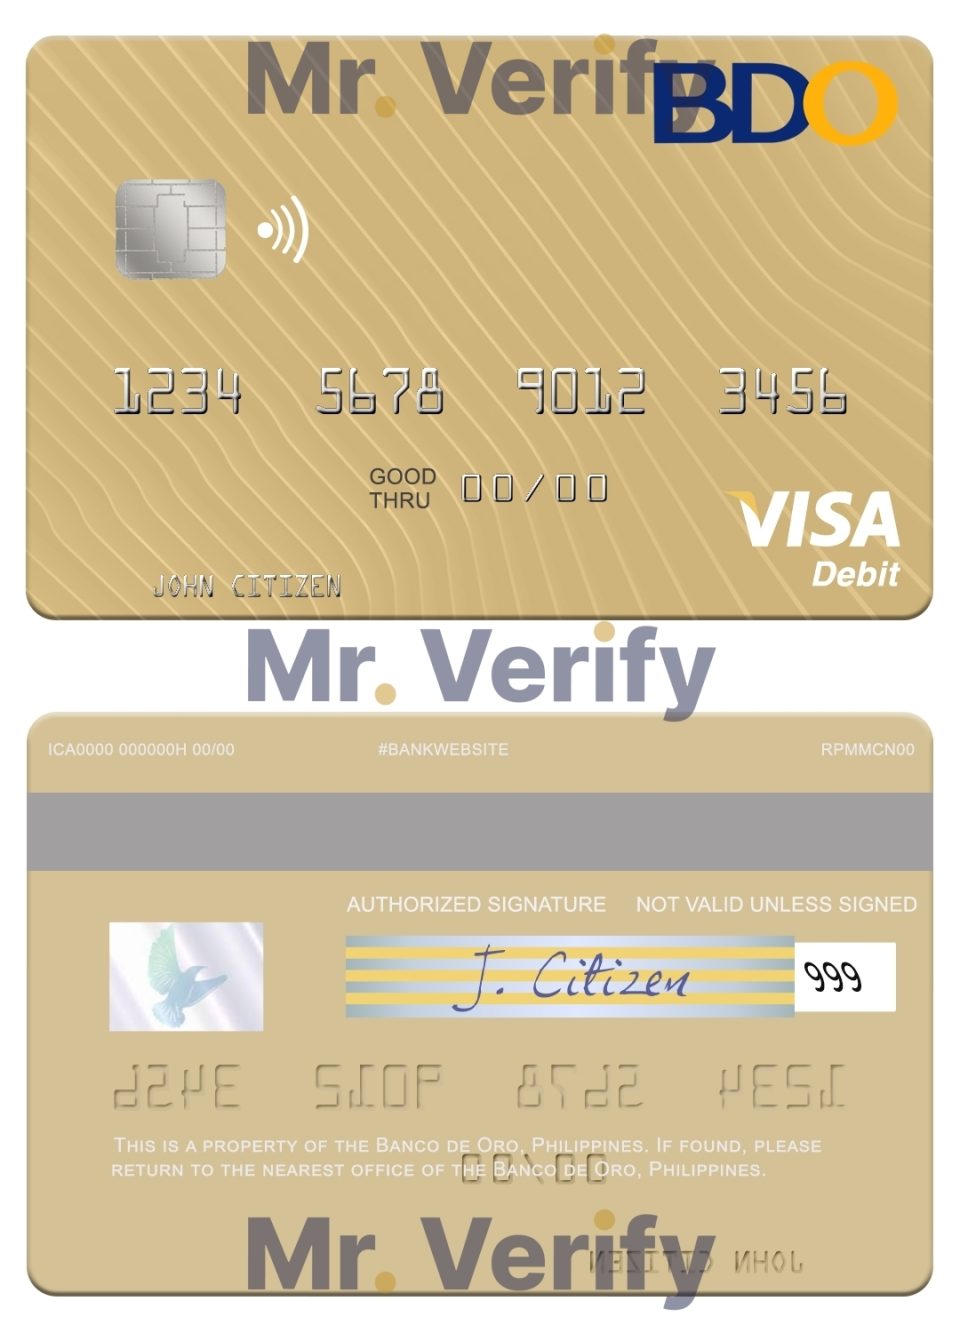 Fillable Philippines Banco de Oro visa debit card Templates | Layer-Based PSD